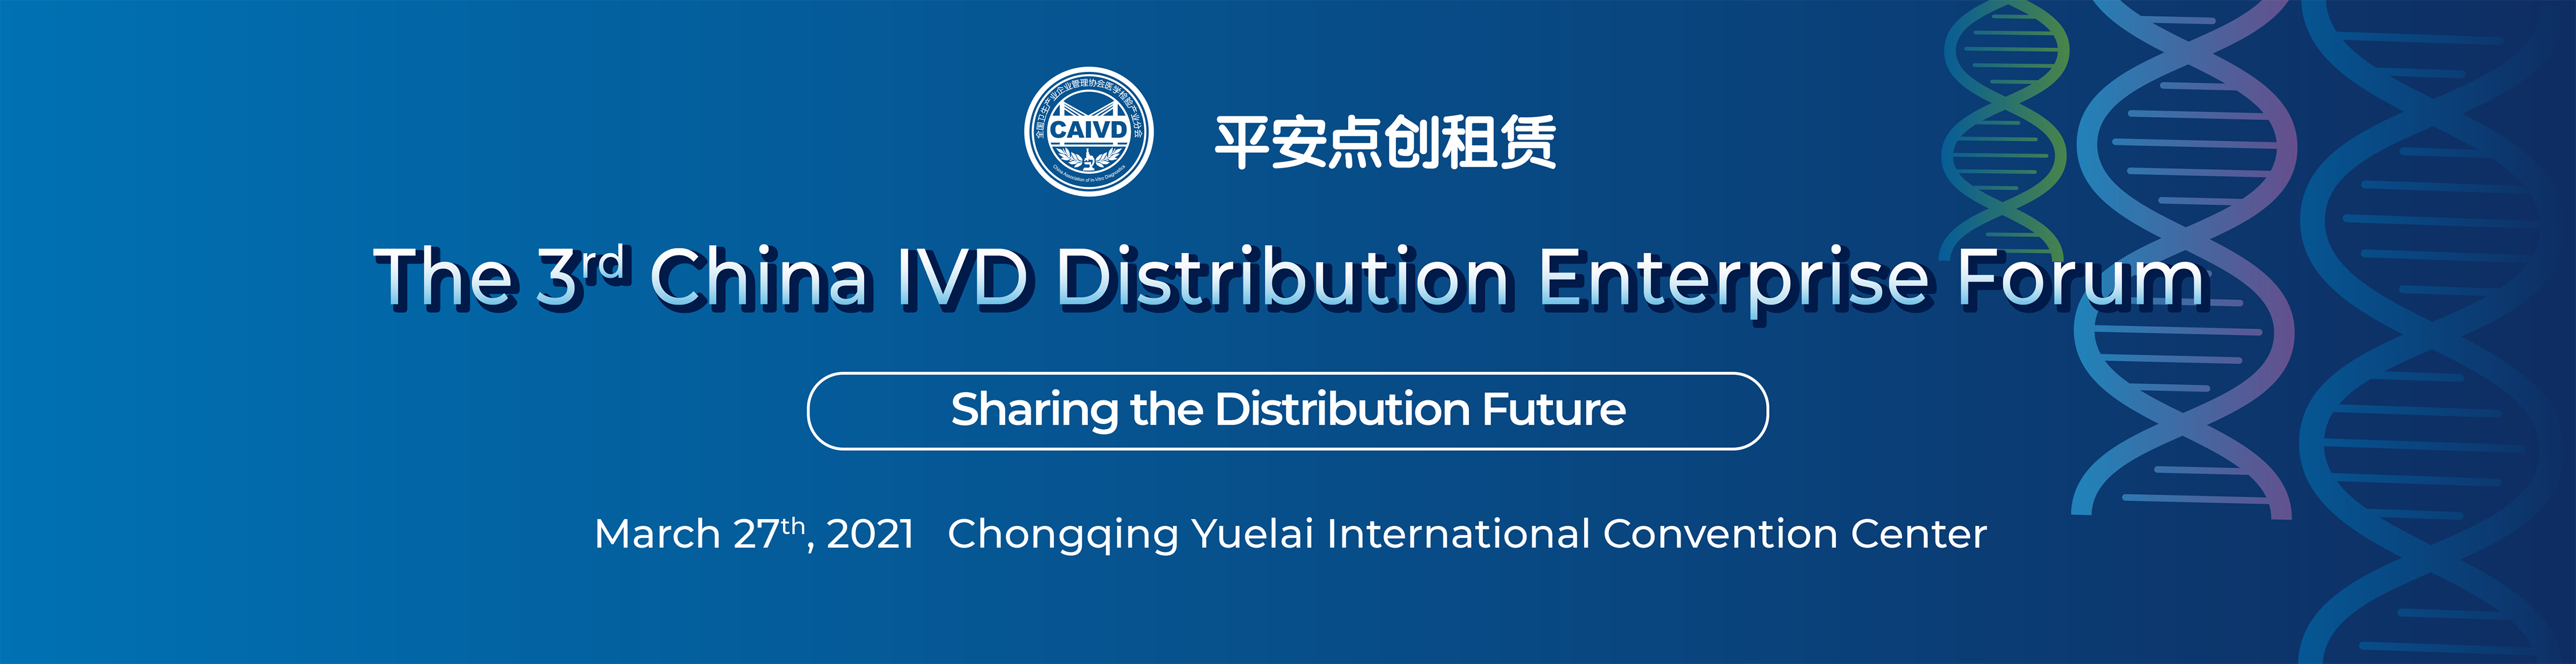 The 3rd China IVD Distribution Enterprise Forum